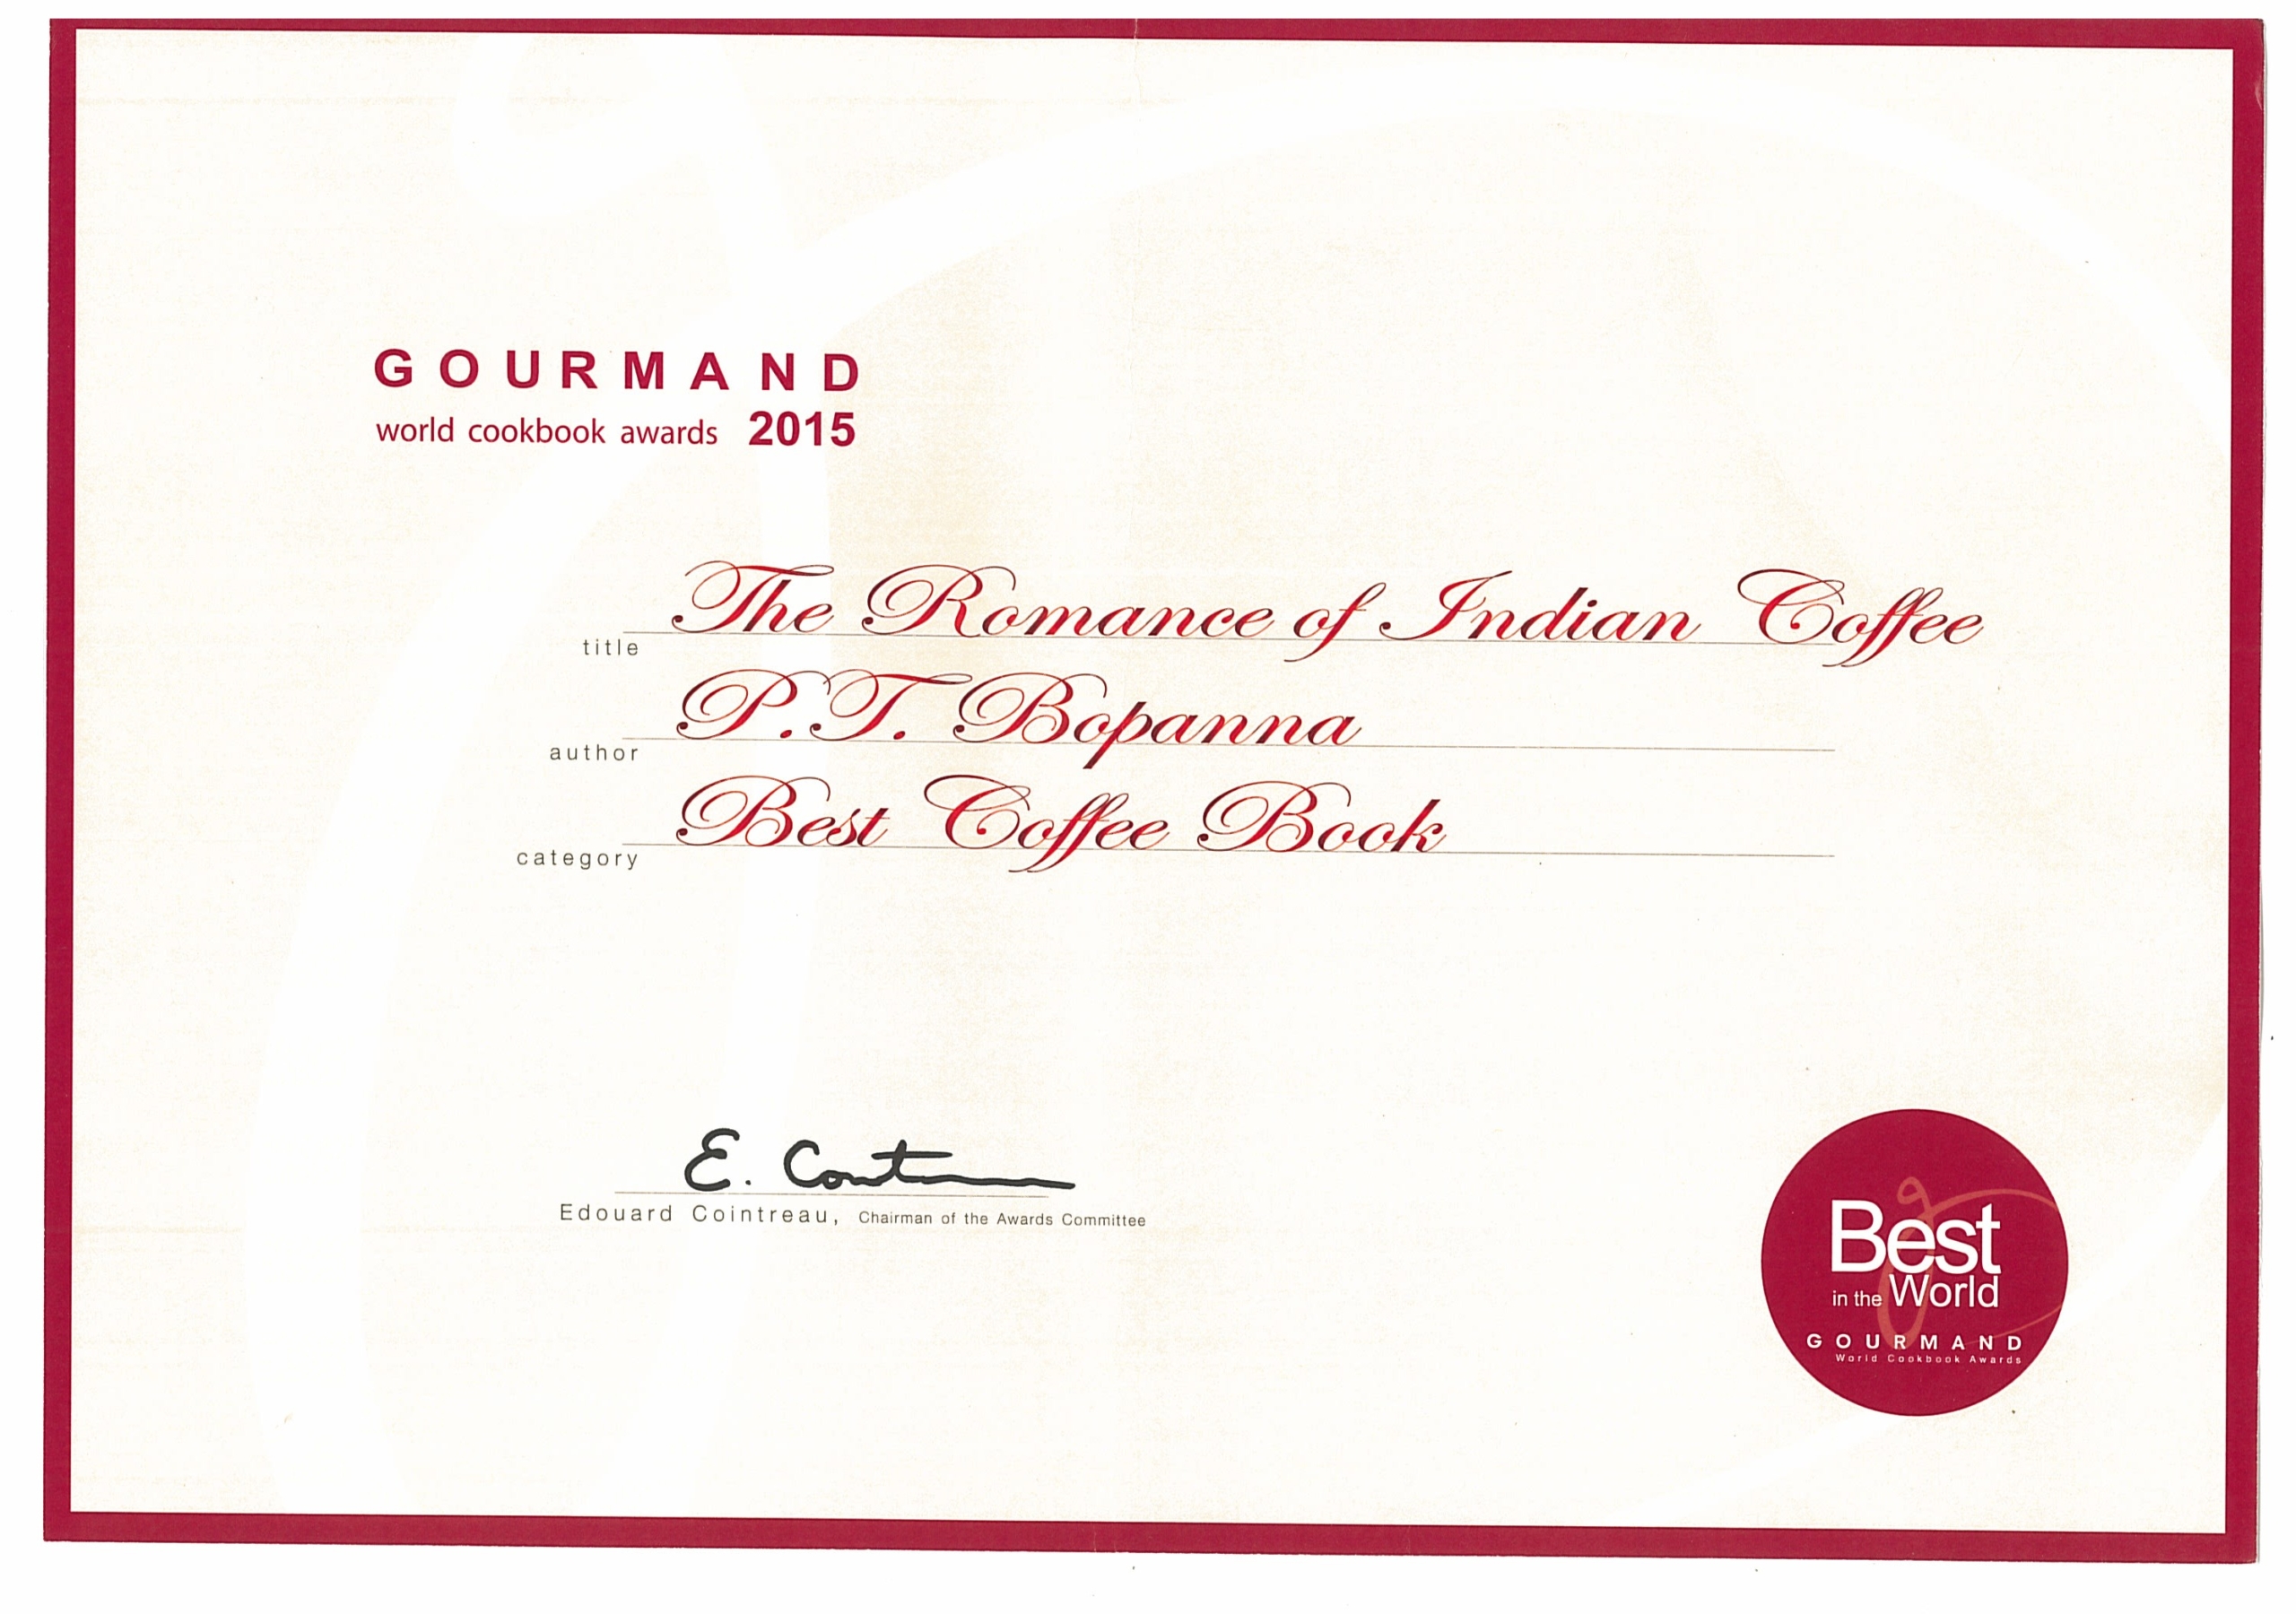 ‘THE ROMANCE OF INDIAN COFFEE’ WINS GOURMAND INTERNATIONAL AWARD